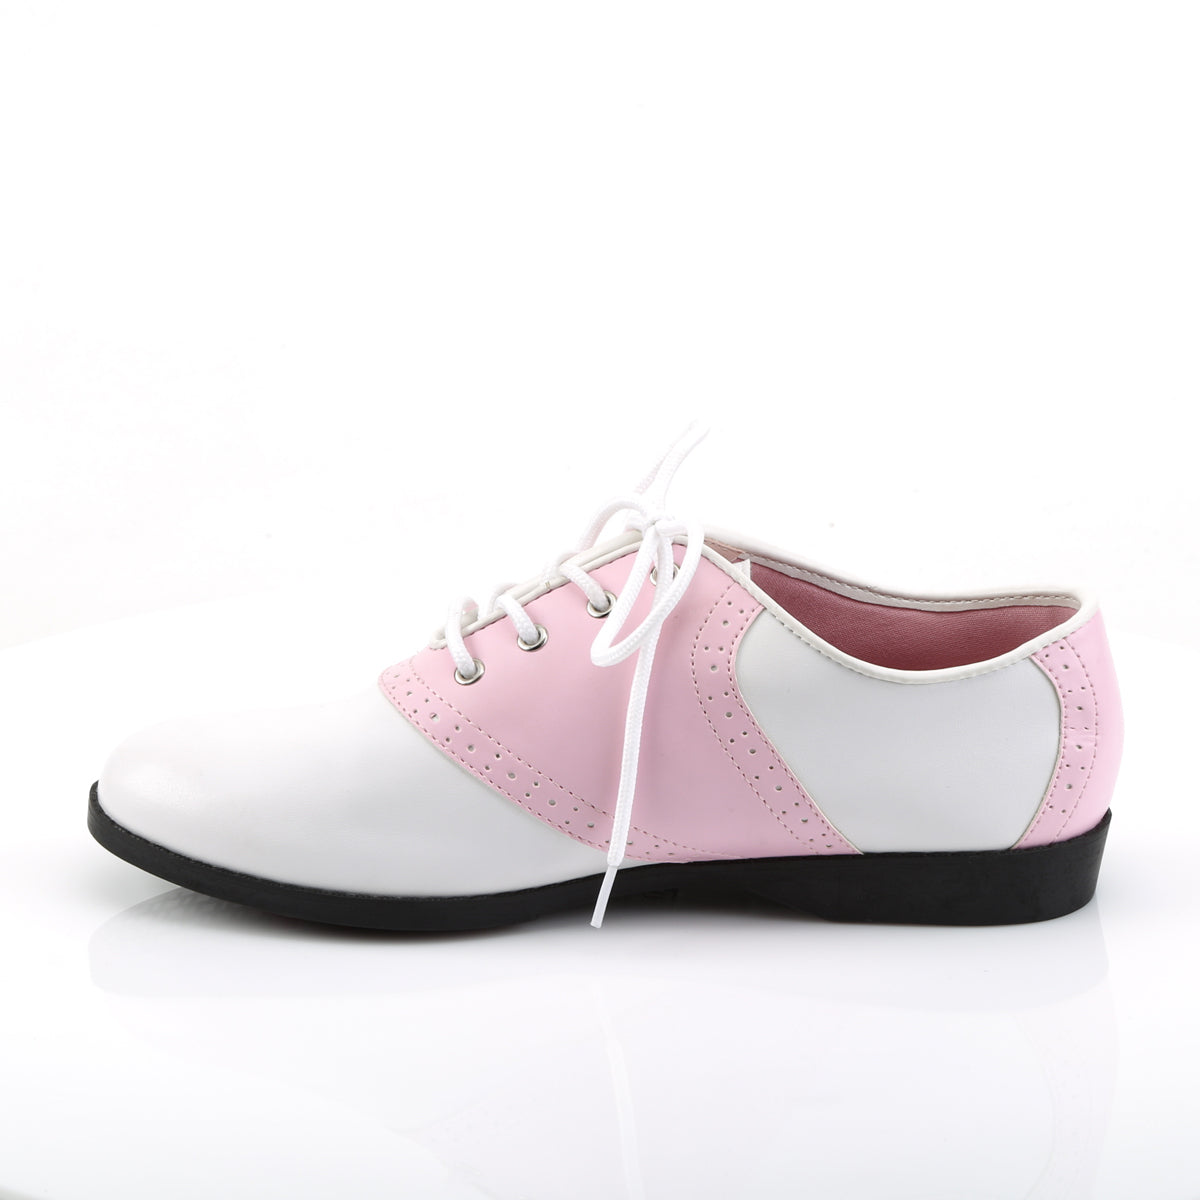 SADDLE-50 Funtasma Fantasy B.Pink-White Pu Women's Shoes [Fancy Dress Costume Shoes]